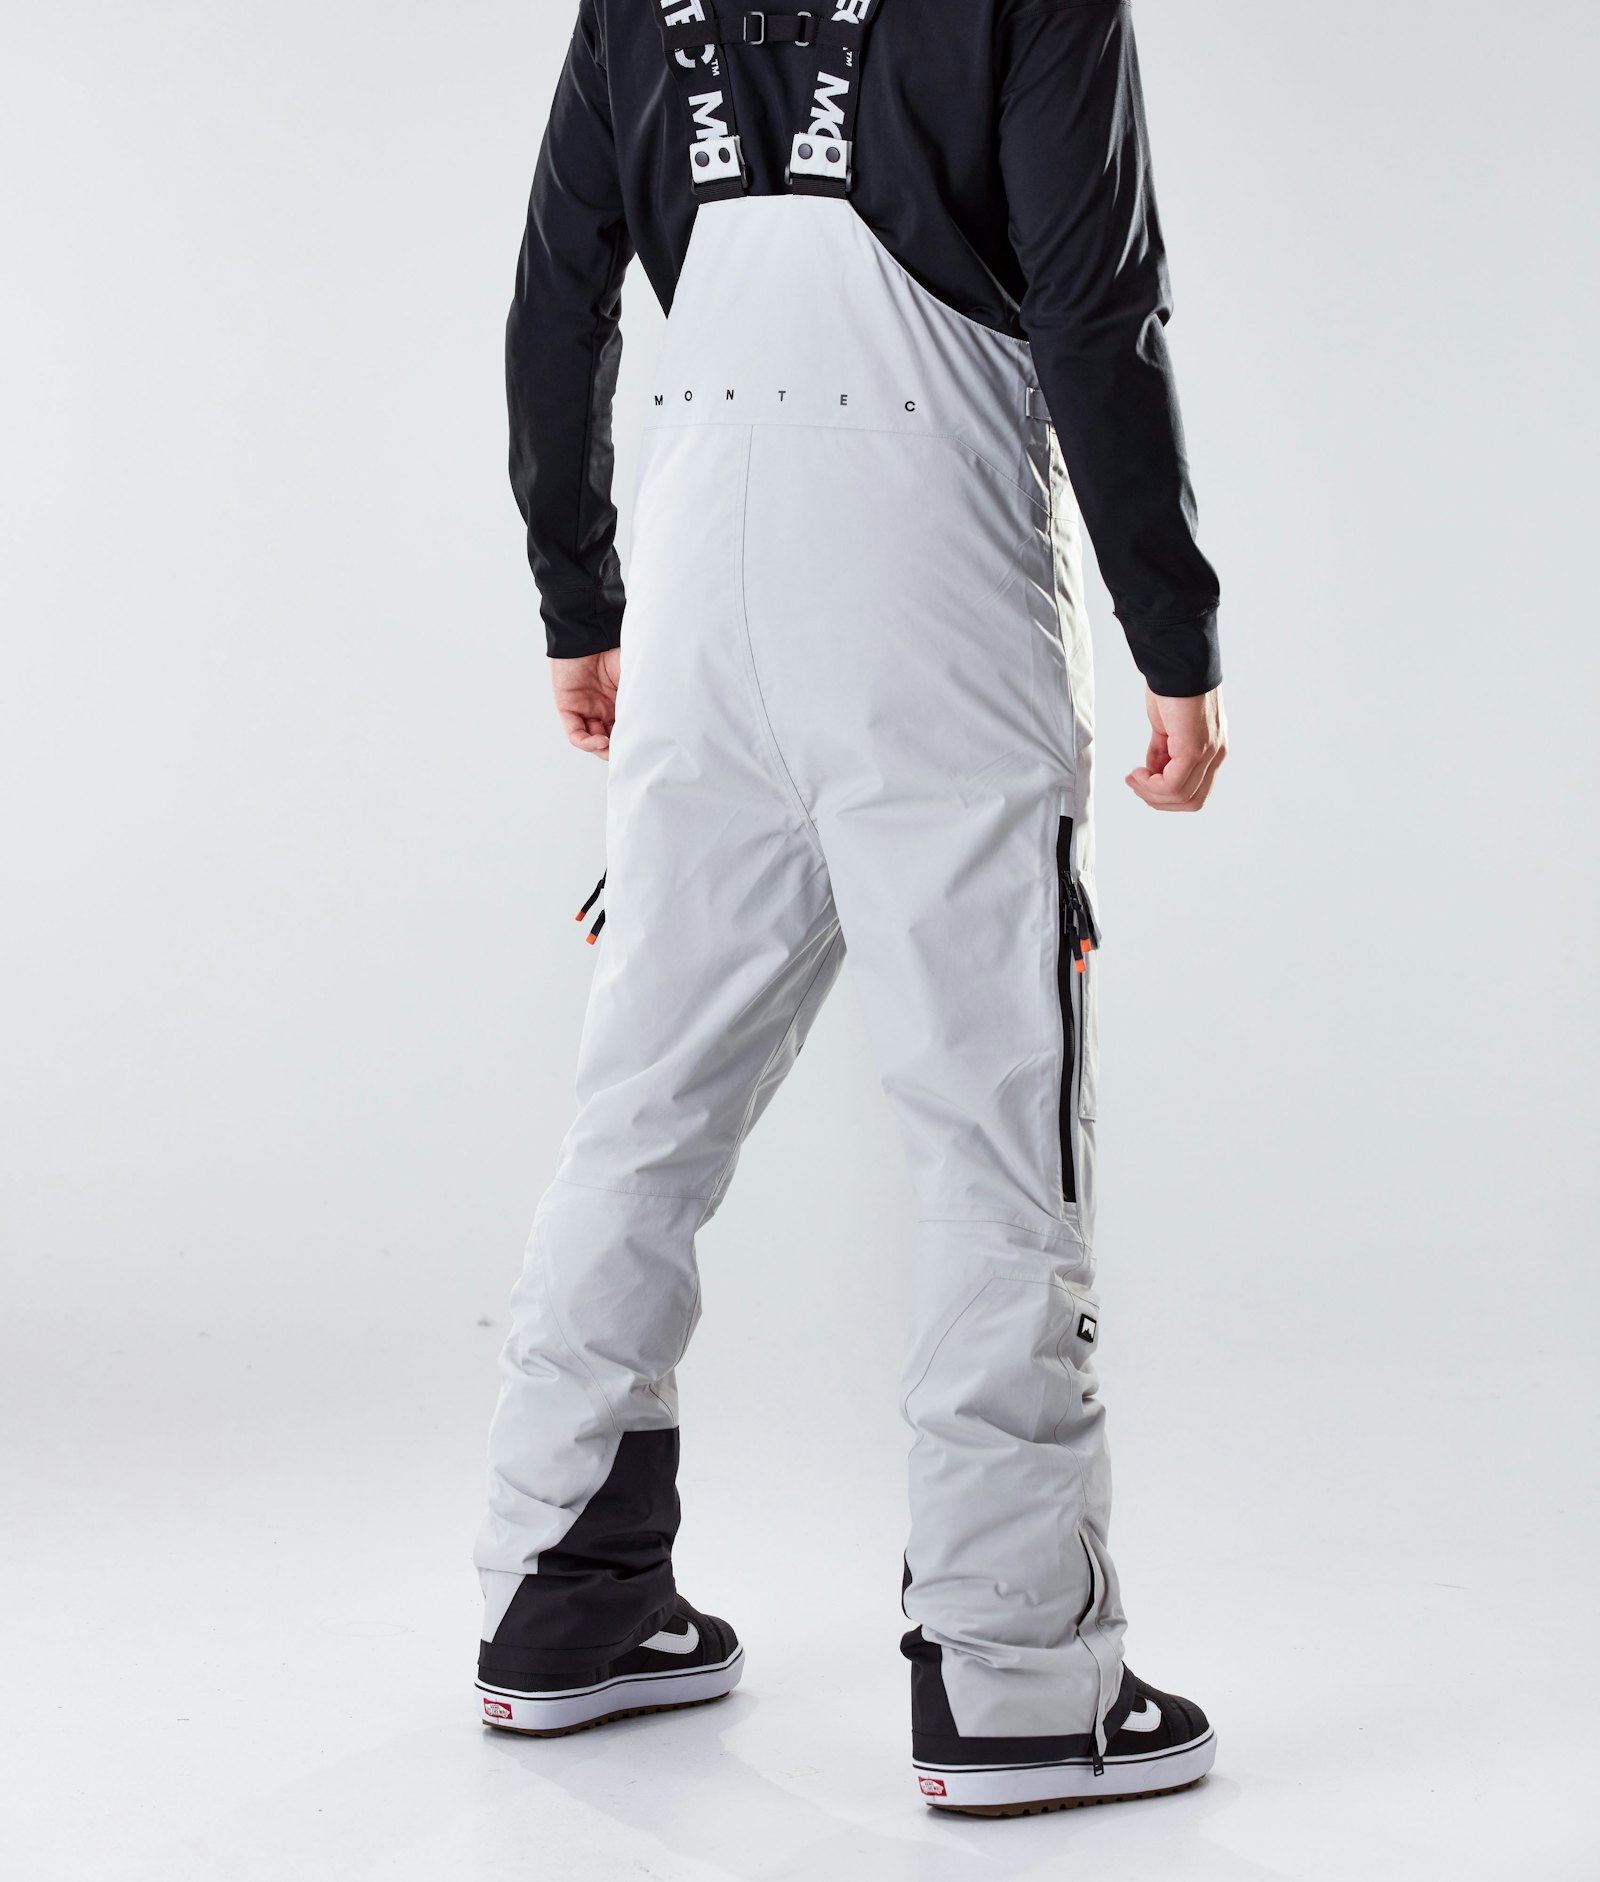 Fawk 2020 Pantaloni Snowboard Uomo Light Grey